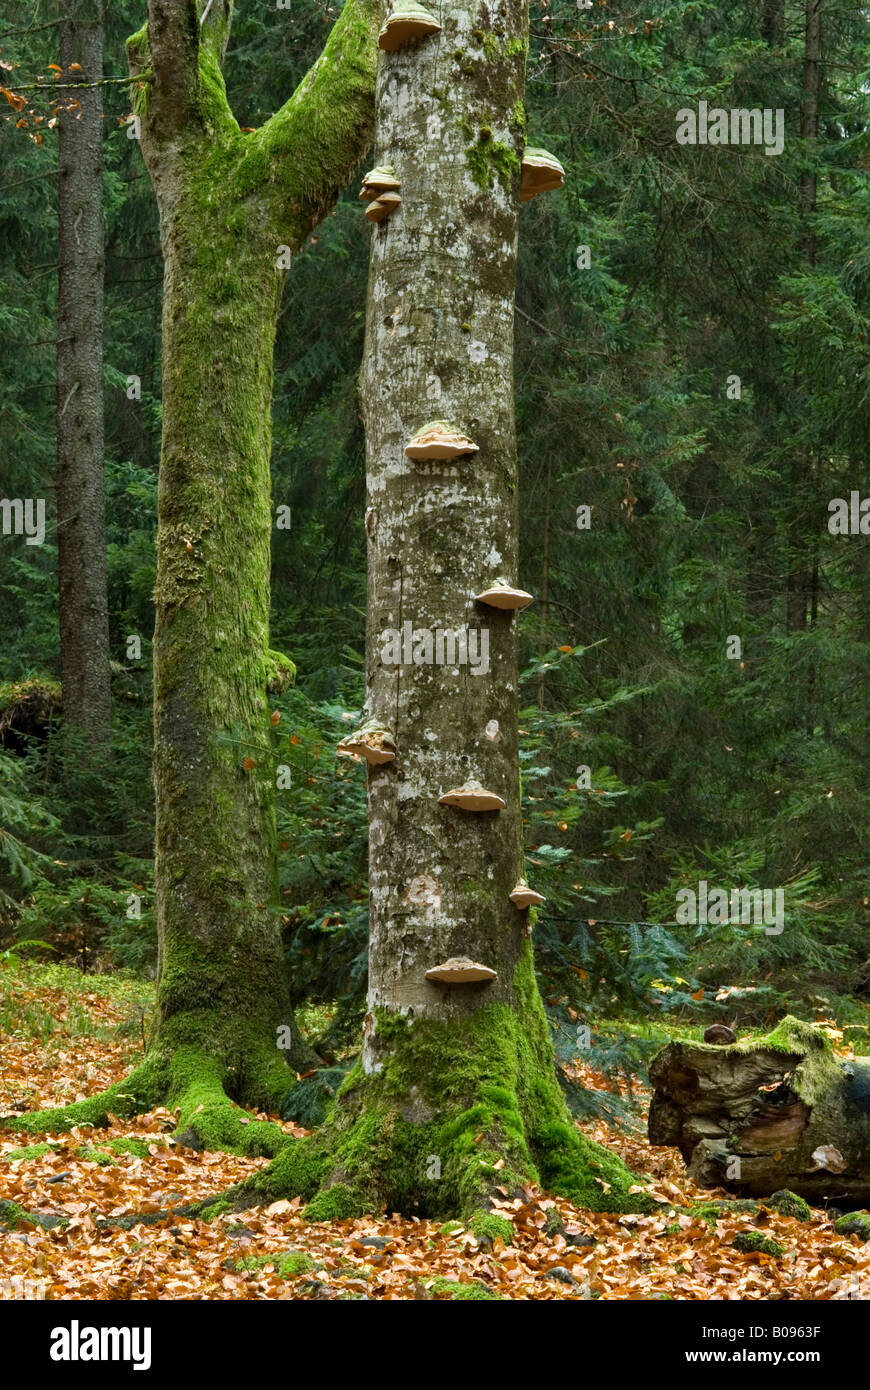 Klammer-Pilz, Baumstämme und Herbst Blätter auf Wald-Boden, Wimbachgries, Nationalpark Berchtesgaden, Bayern, Deutschland Stockfoto